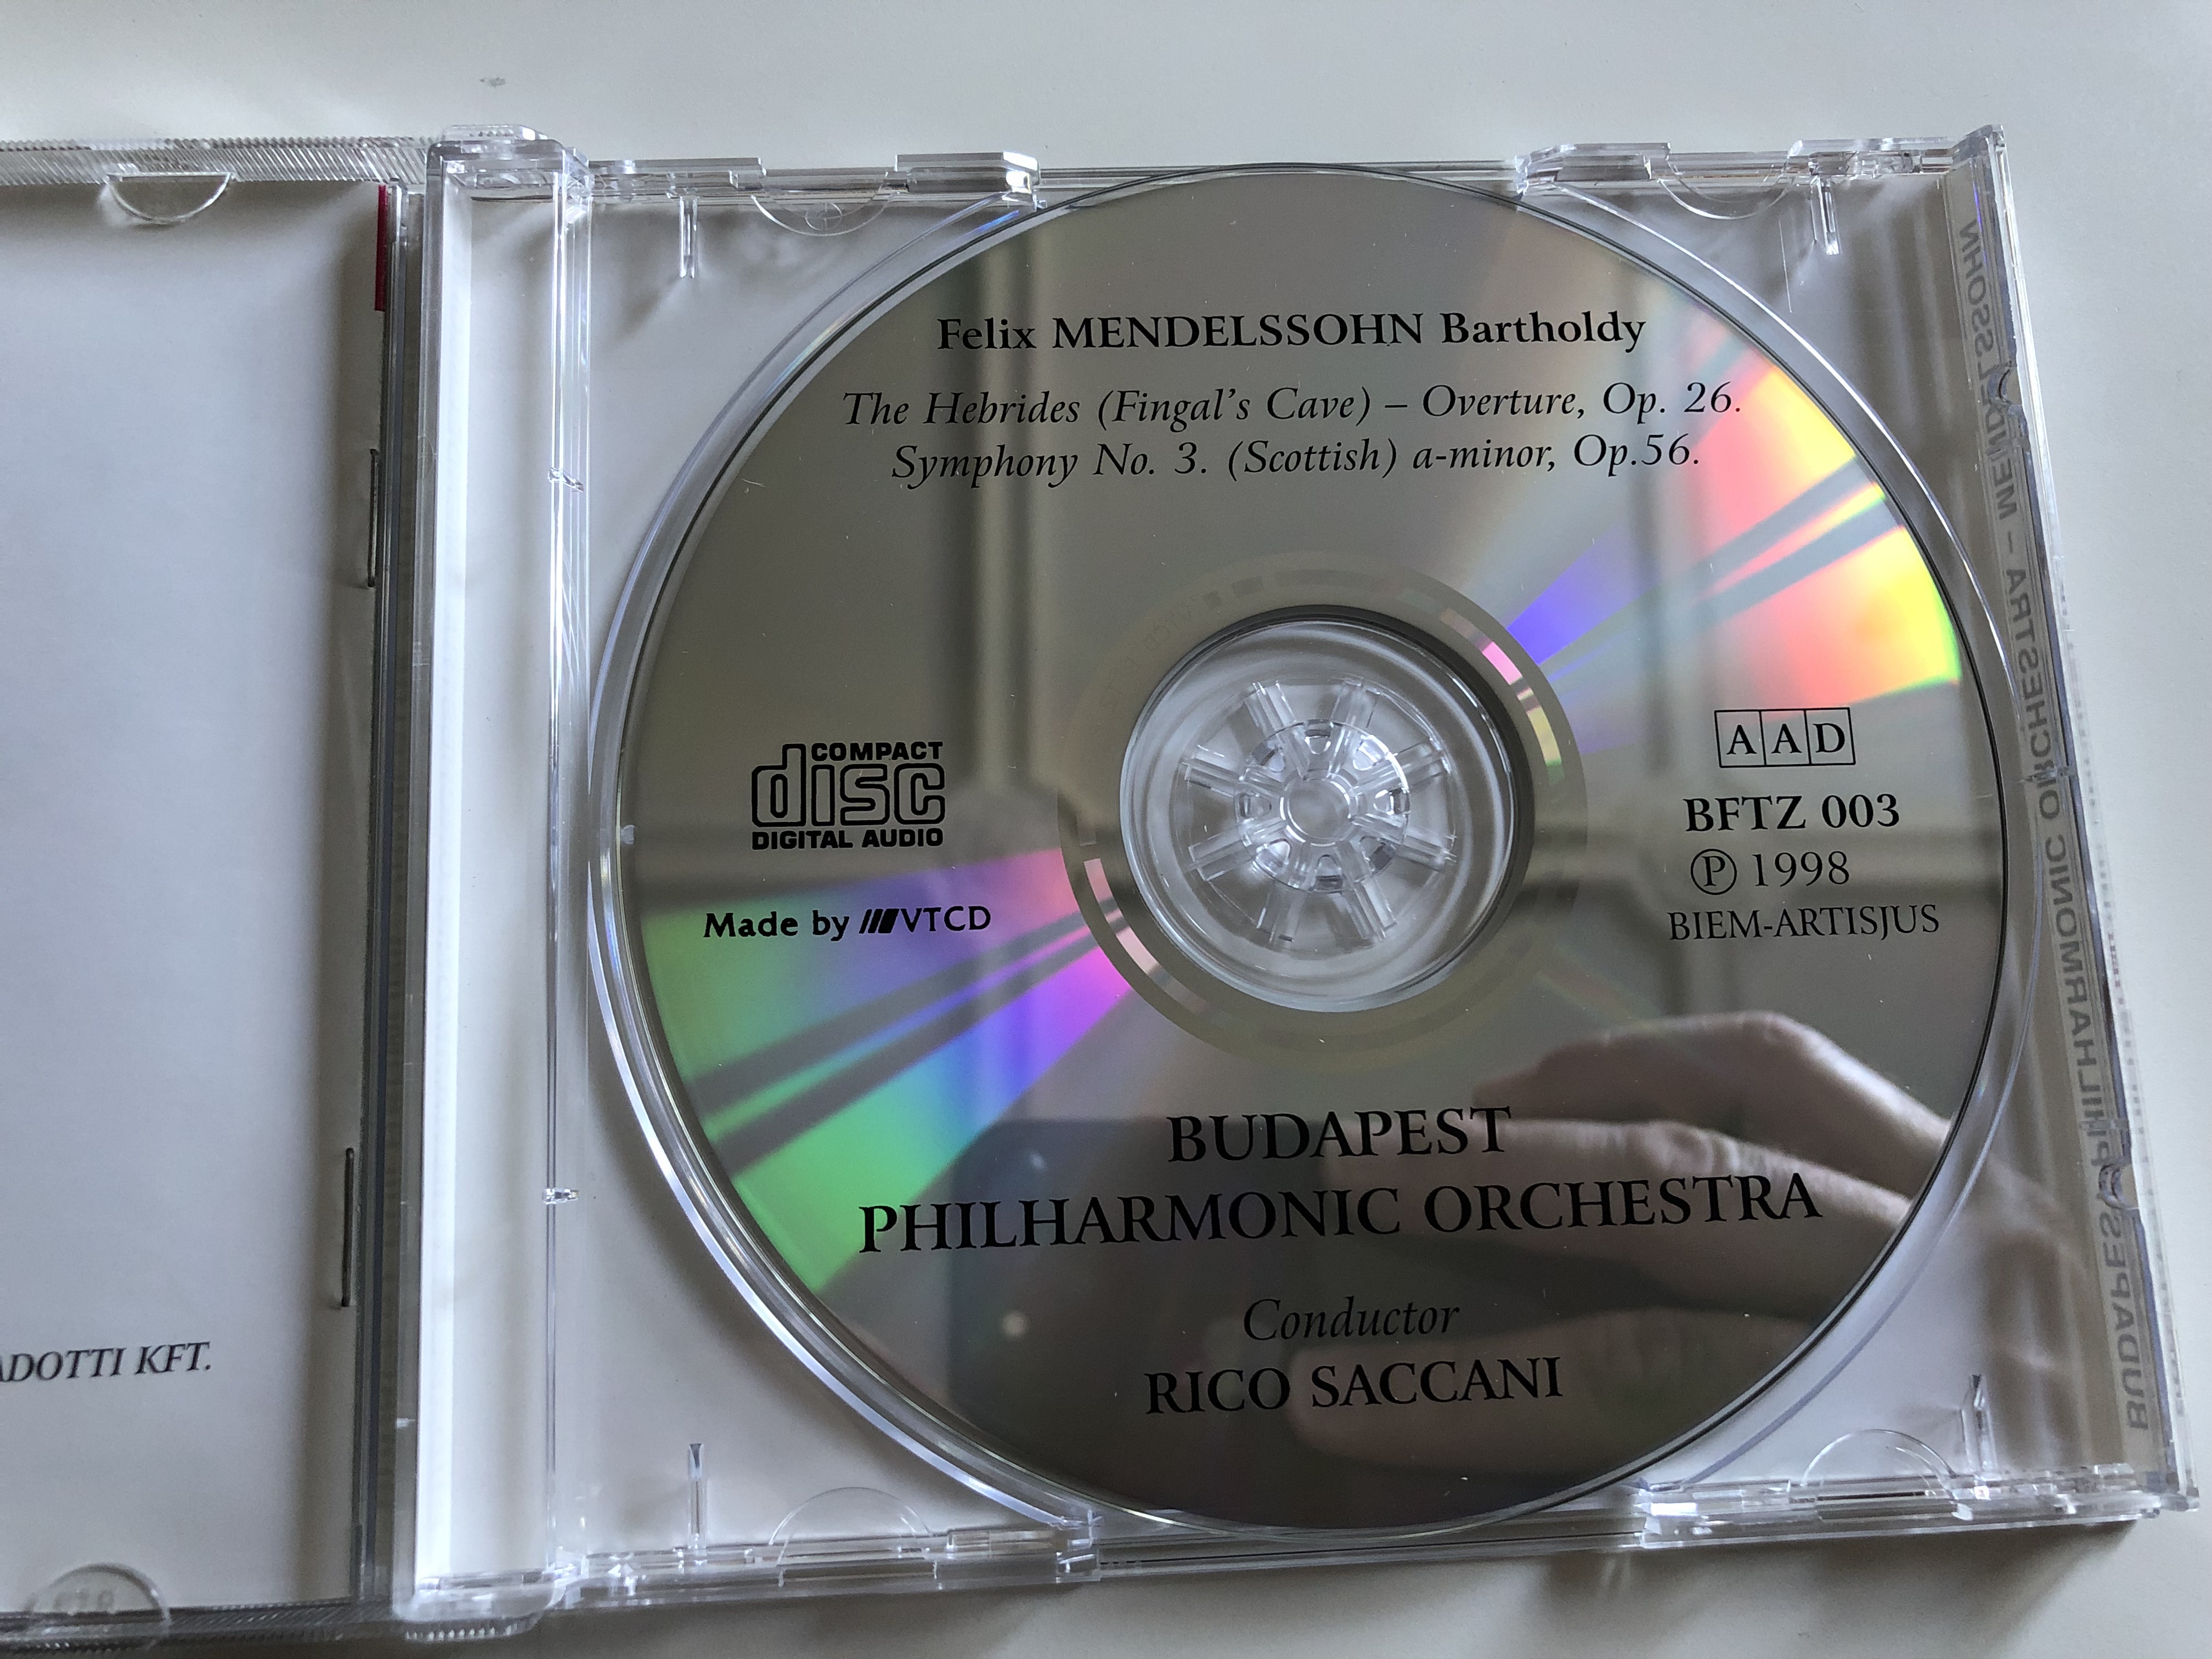 budapest-philharmonic-orchestra-conducted-rico-saccani-felix-mendelssohn-bartholdy-the-hebrides-fingal-s-cave-overture-symphony-no.3-scottish-a-minor-vtcd-audio-cd-1998-bftz-003-1-8-.jpg